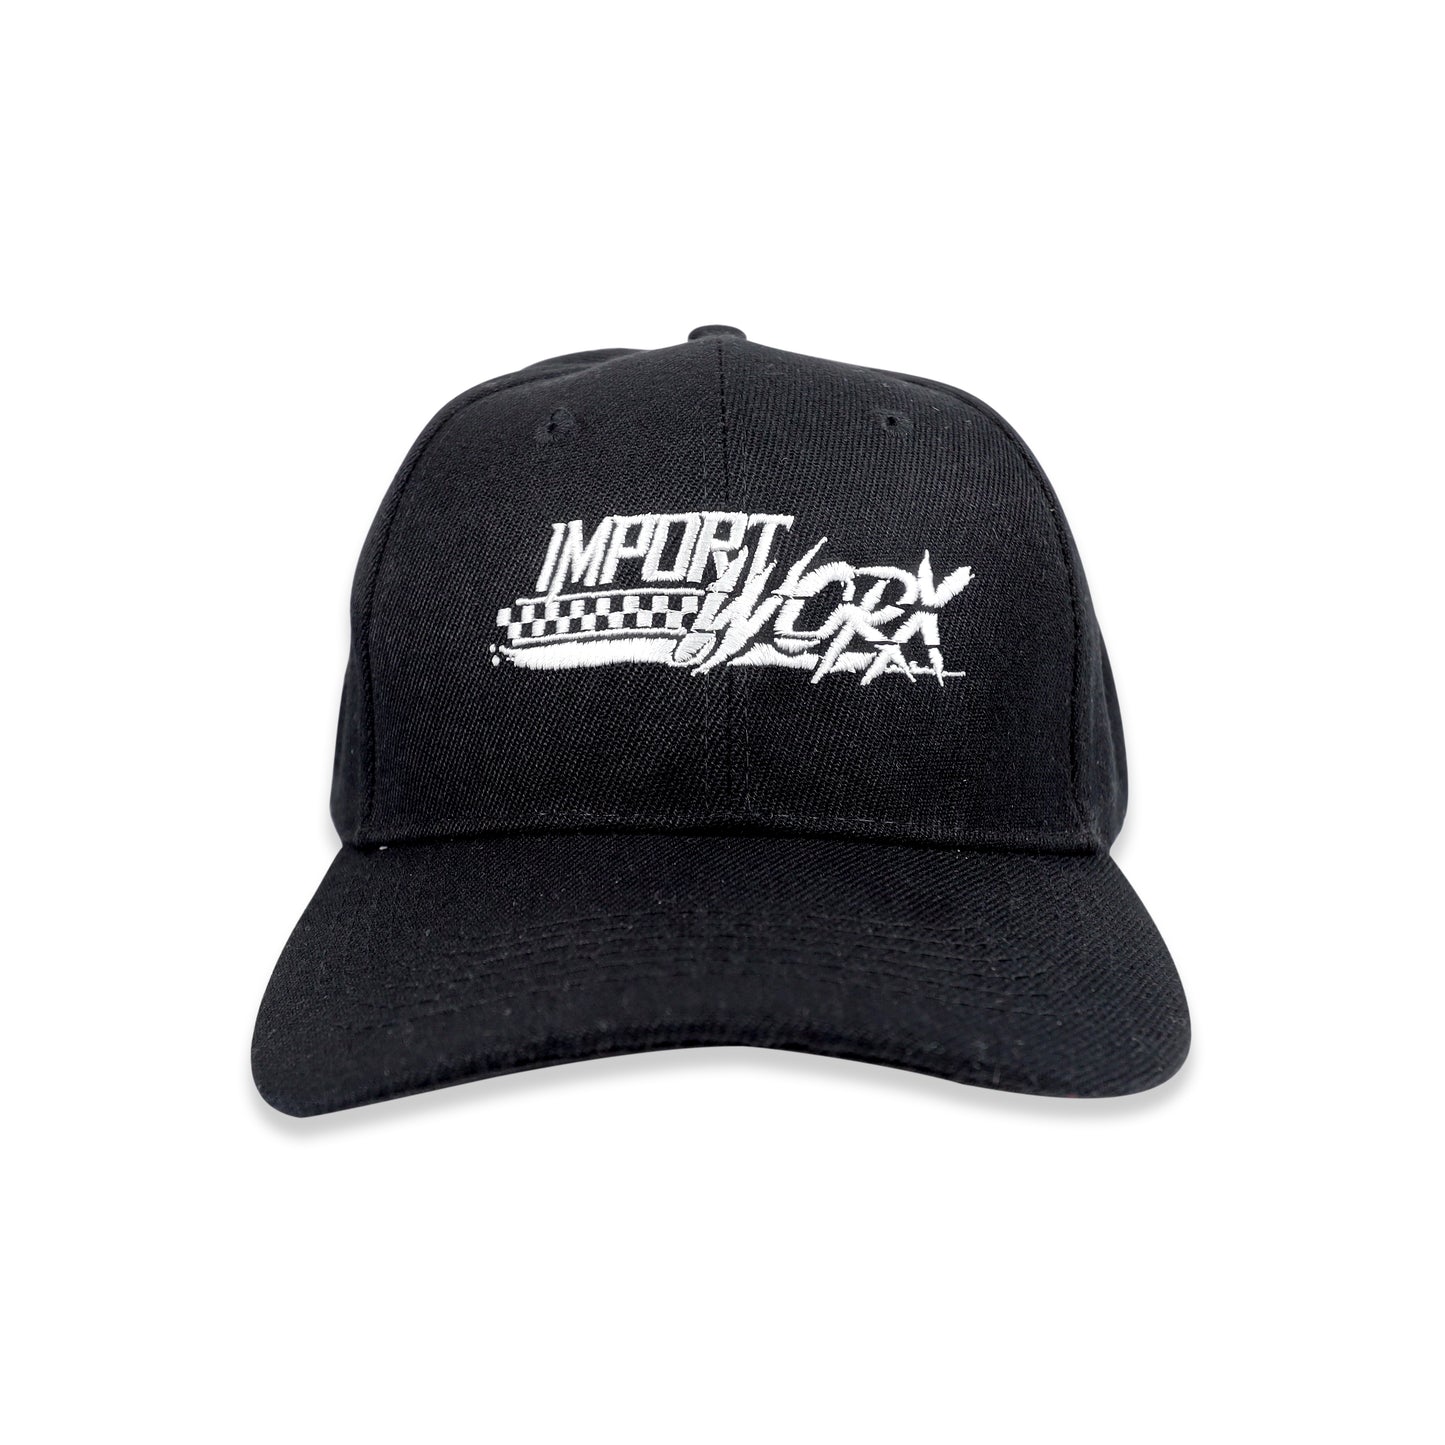 ImportWorx Black Checkered Embroidered Veclro Strap Hat